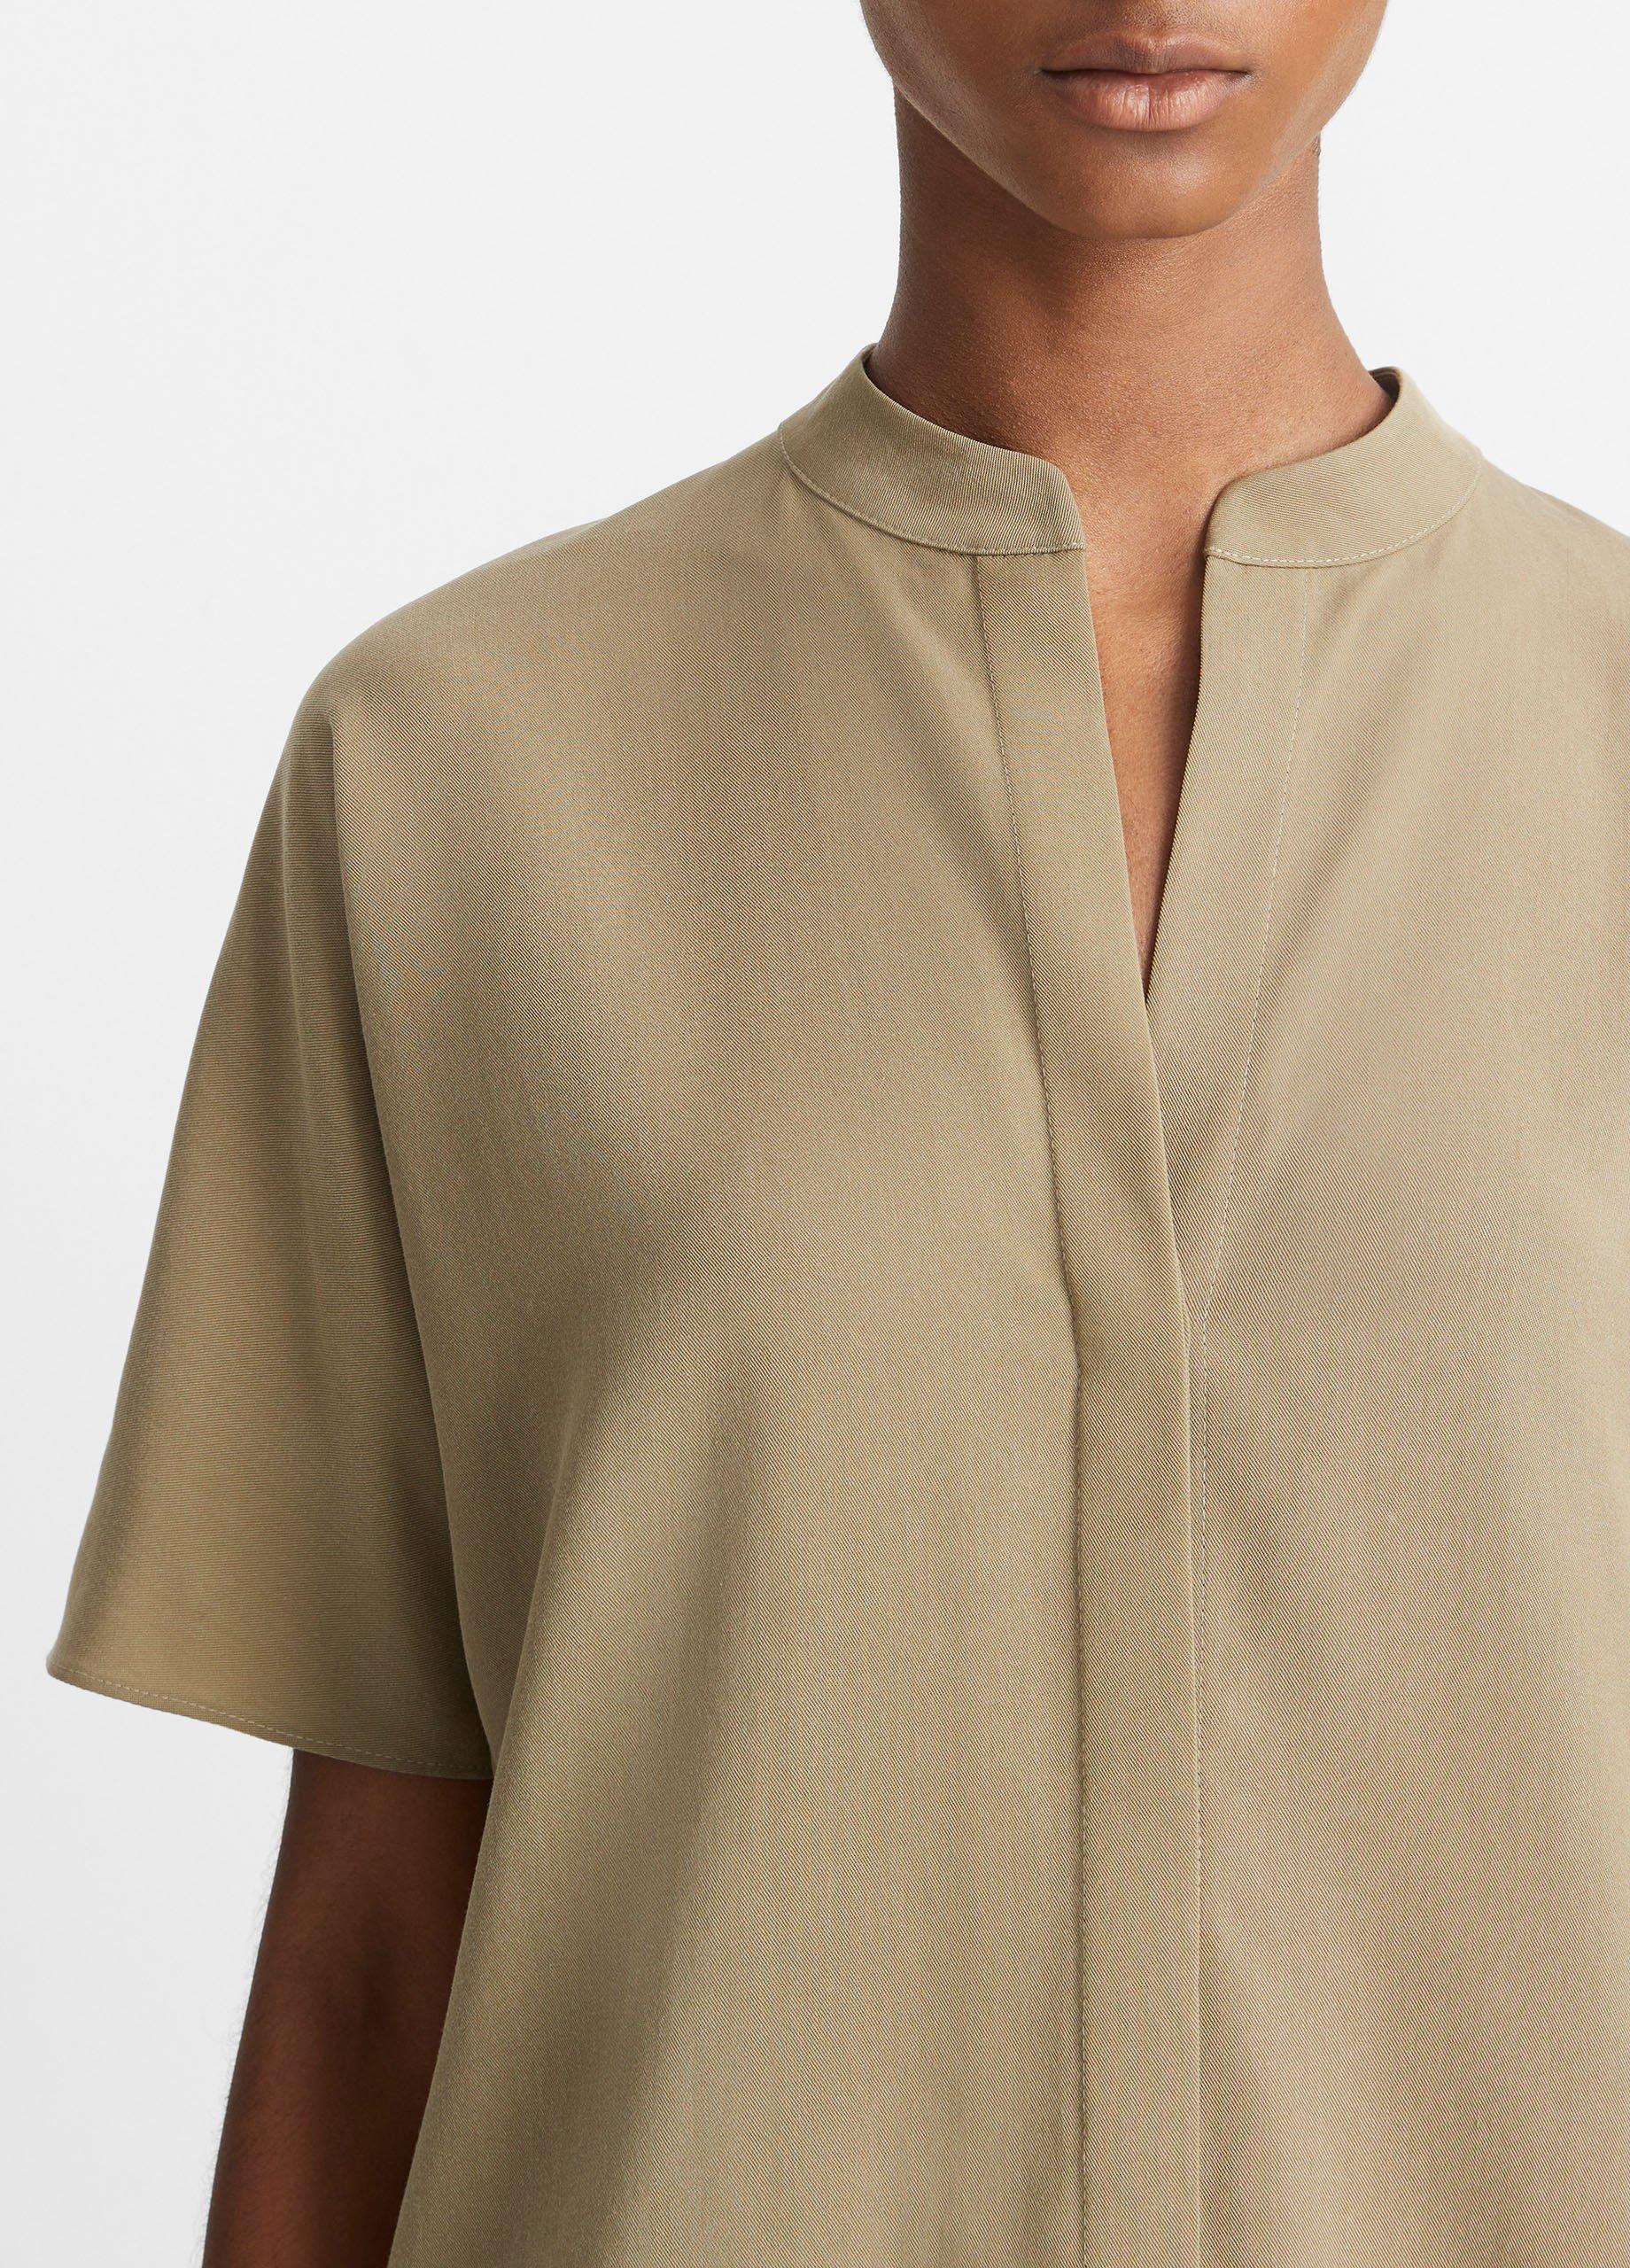 Band-Collar Dolman-Sleeve Shirt in Short Sleeve | Vince